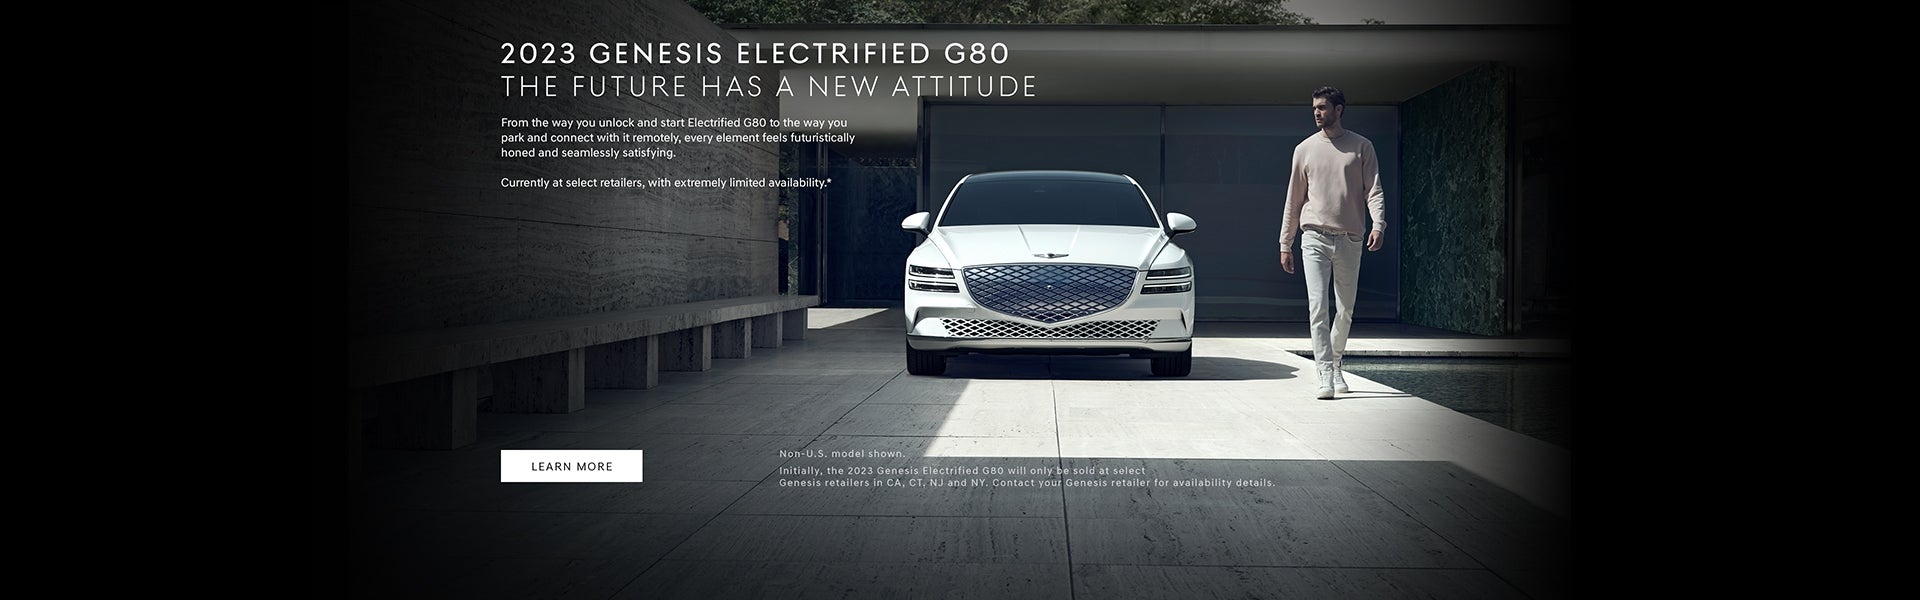 Genesis Electrified G80 